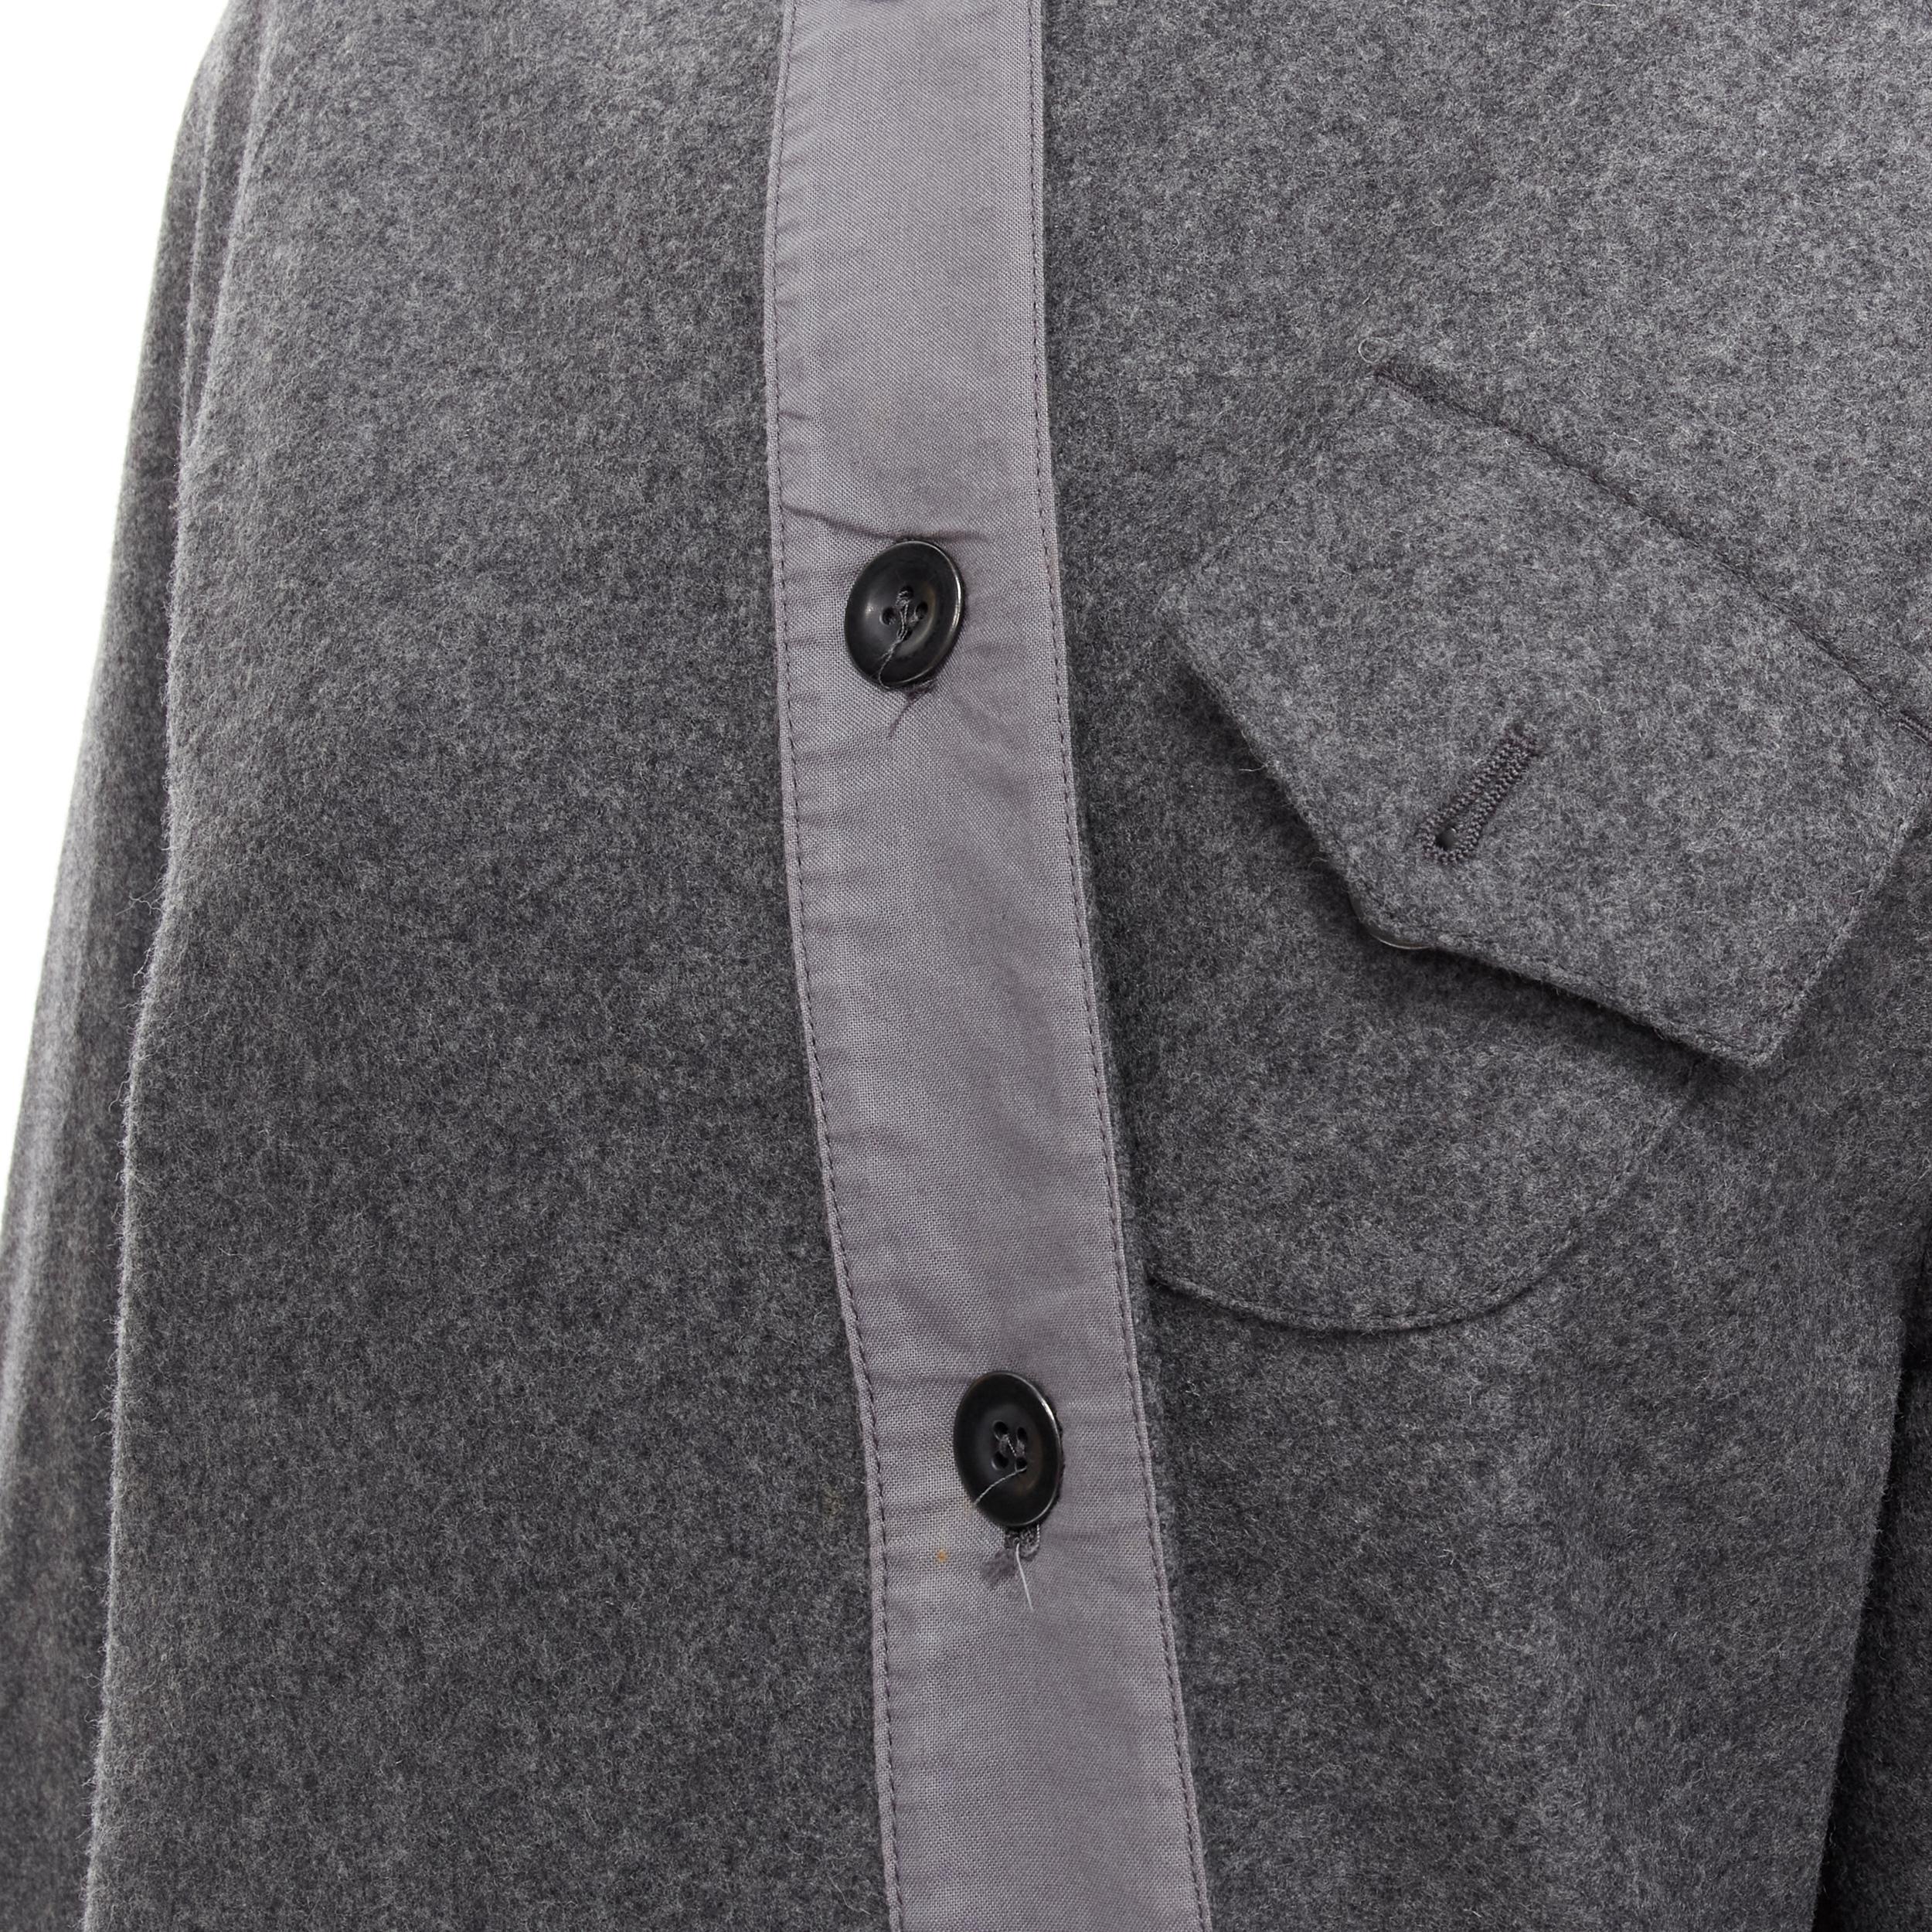 MIU MIU grey cashmere wool blend asymmetric button boxy coat IT38 XS 
Reference: CELG/A00157 
Brand: Miu Miu 
Designer: Miuccia Prada 
Material: Wool 
Color: Grey 
Pattern: Solid 
Closure: Button 
Extra Detail: Missing detachable fur collar. Curved